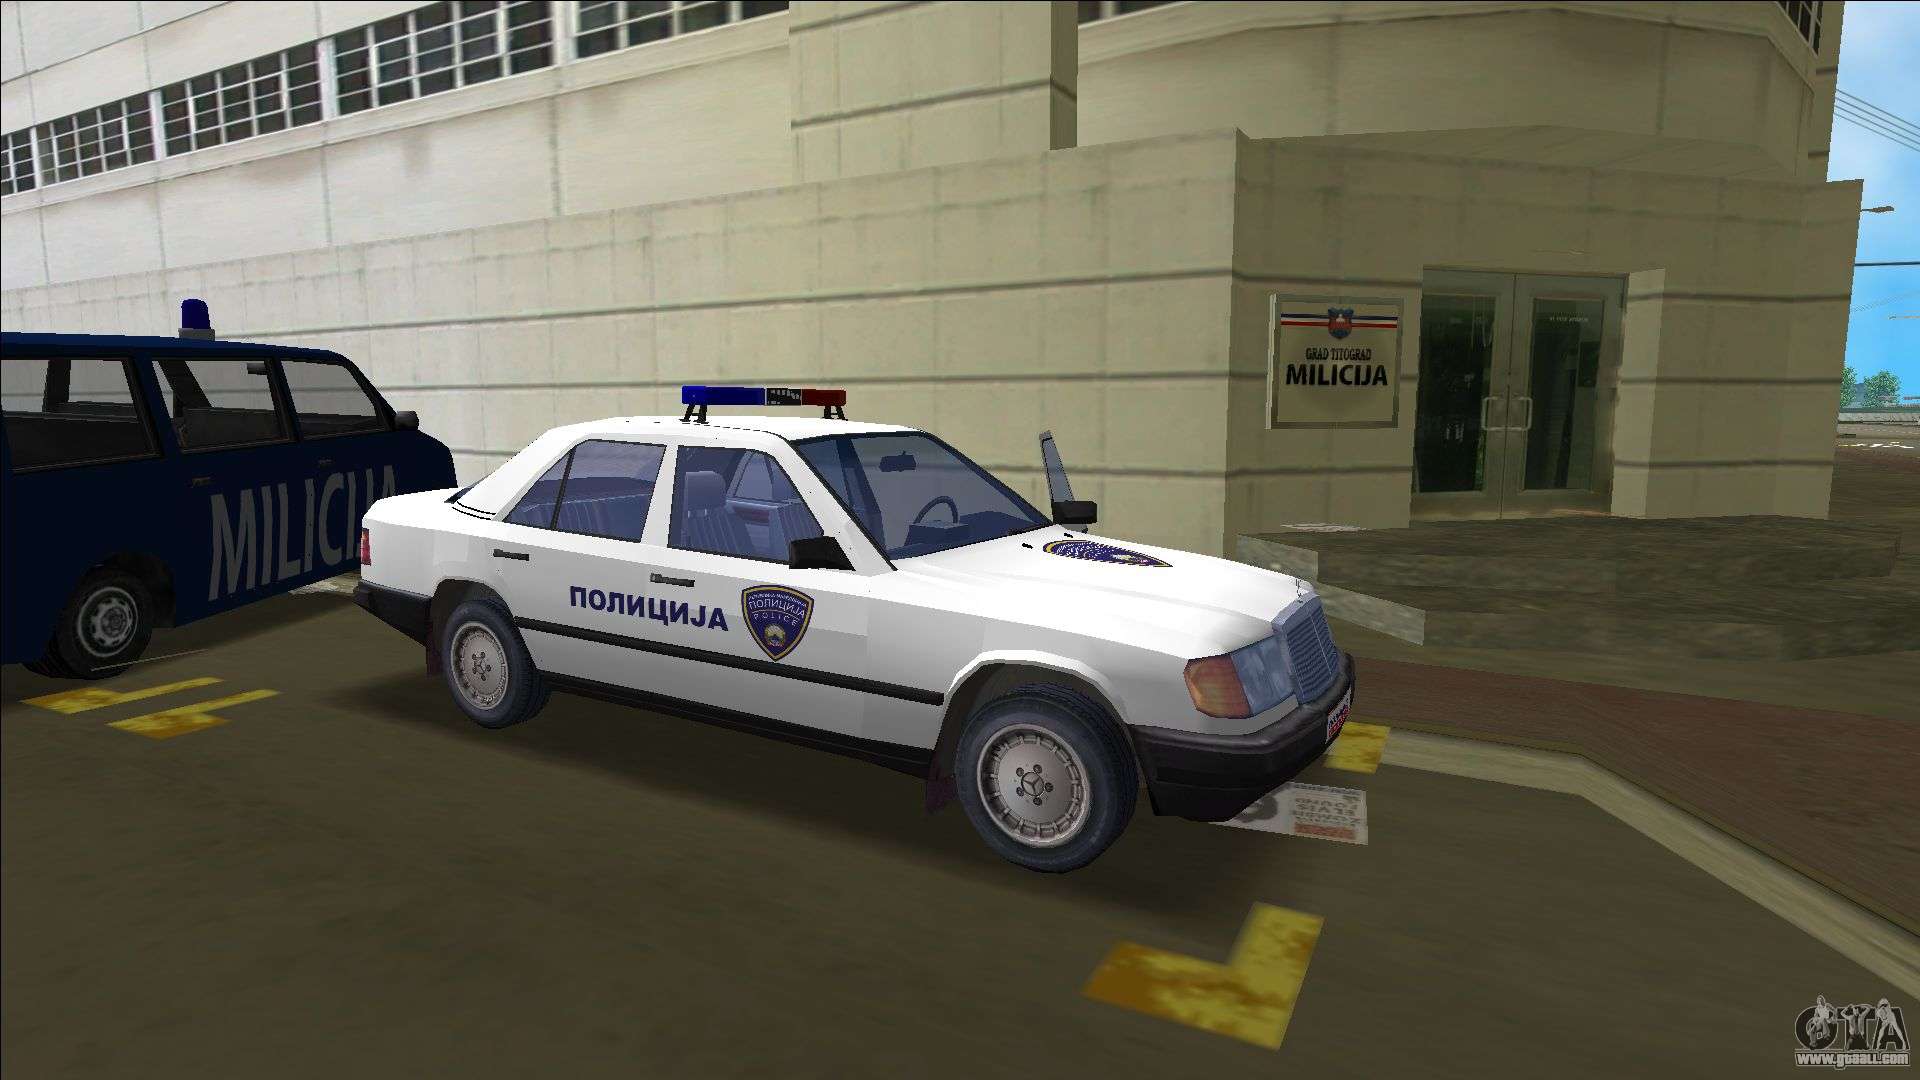 vice city police car